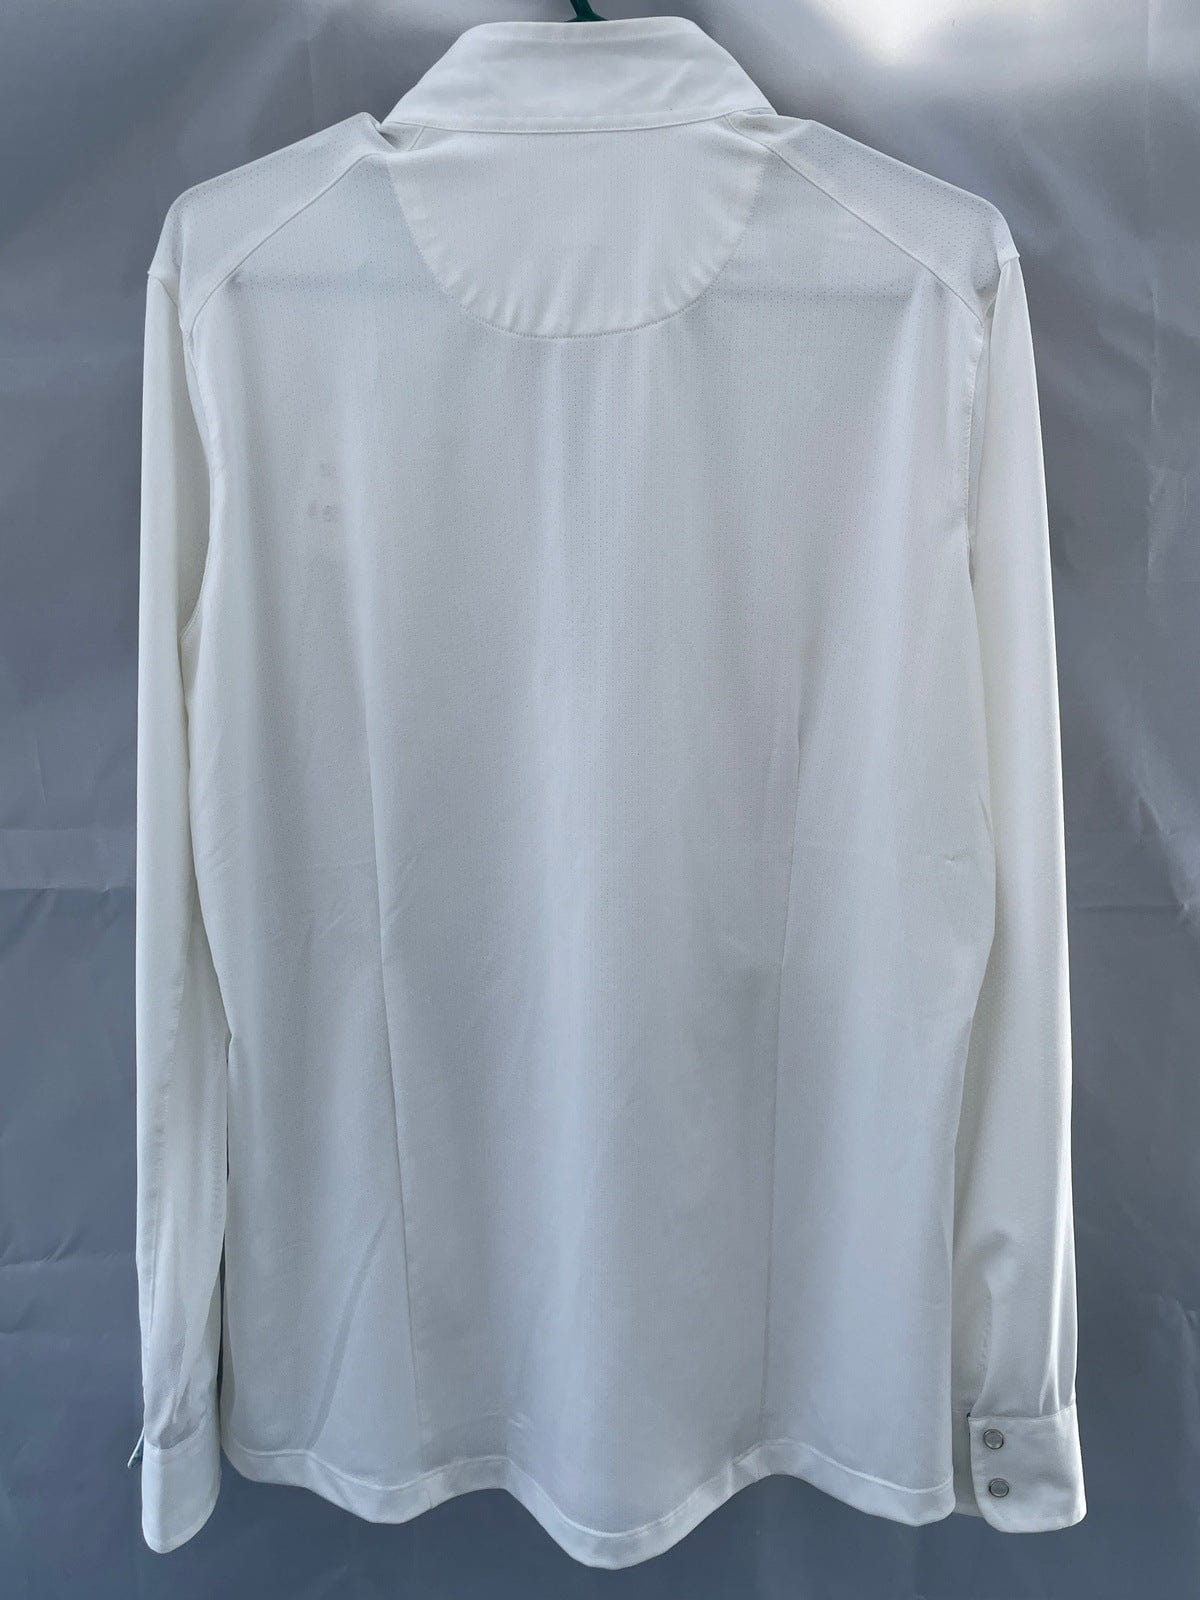 ThriftedEquestrian Clothing XL Essex Show Shirt - XL